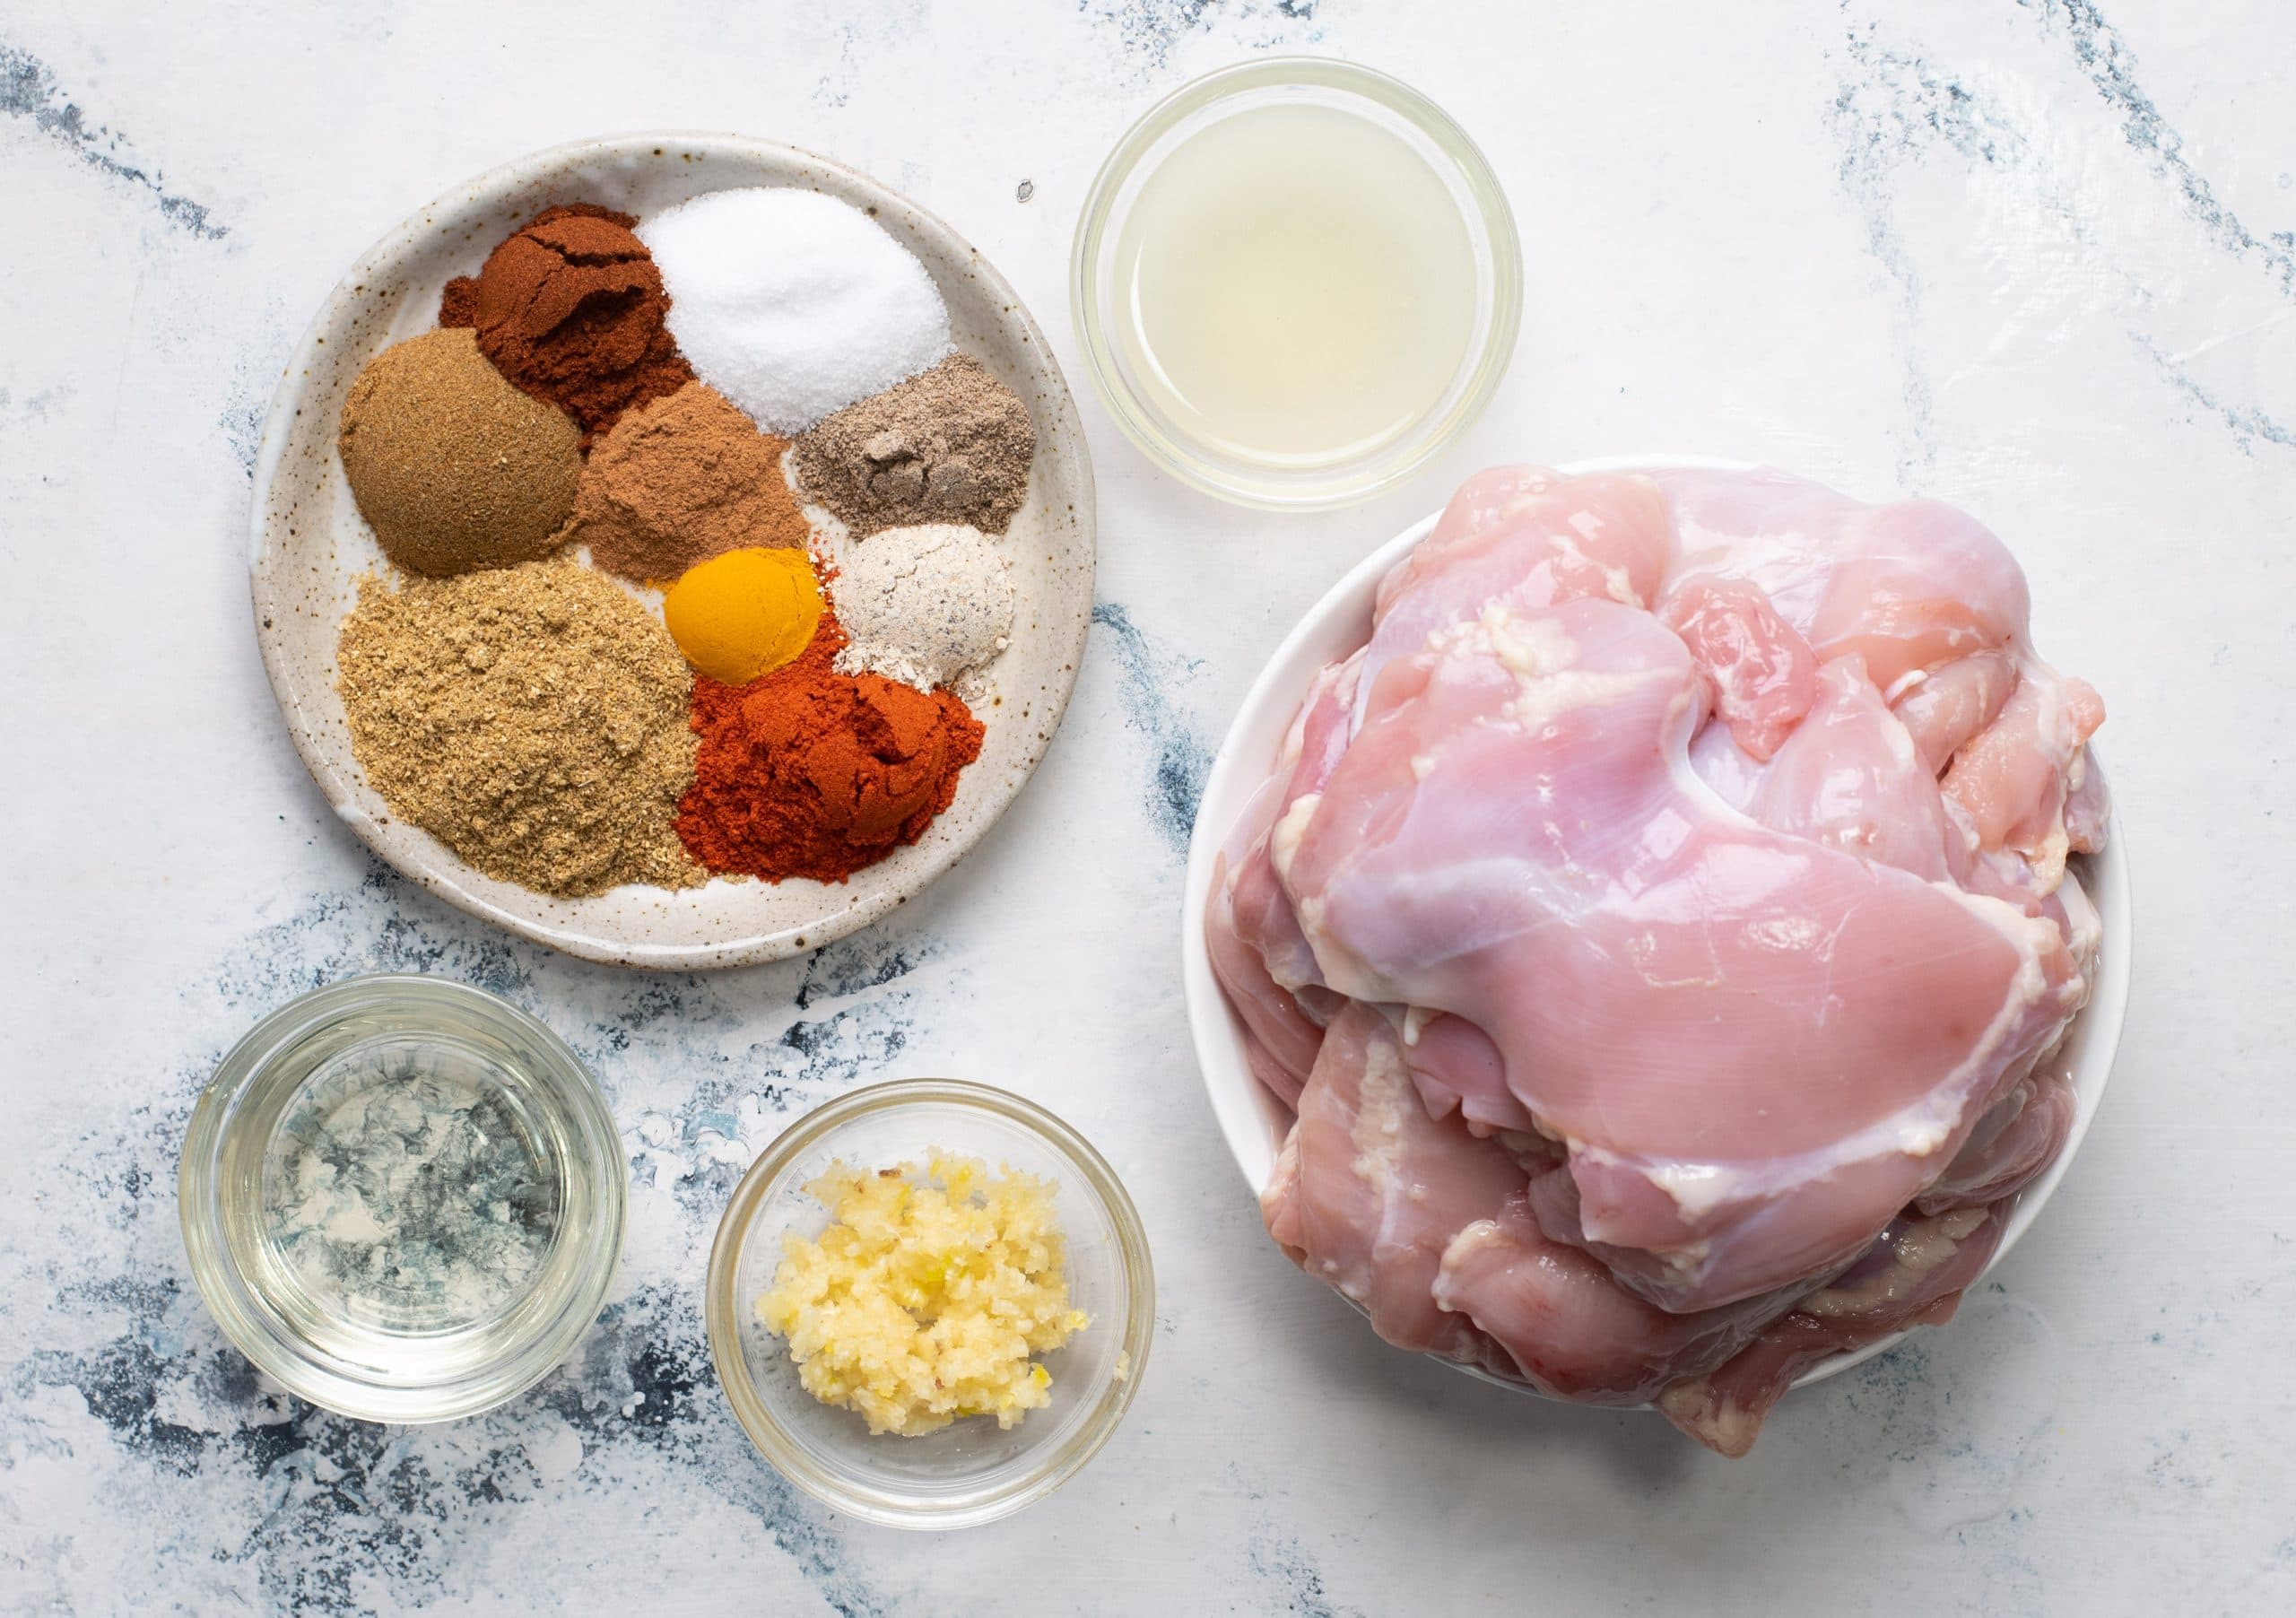 Ingredients required to marinated chicken to make grilled chicken for chicken shawarma.